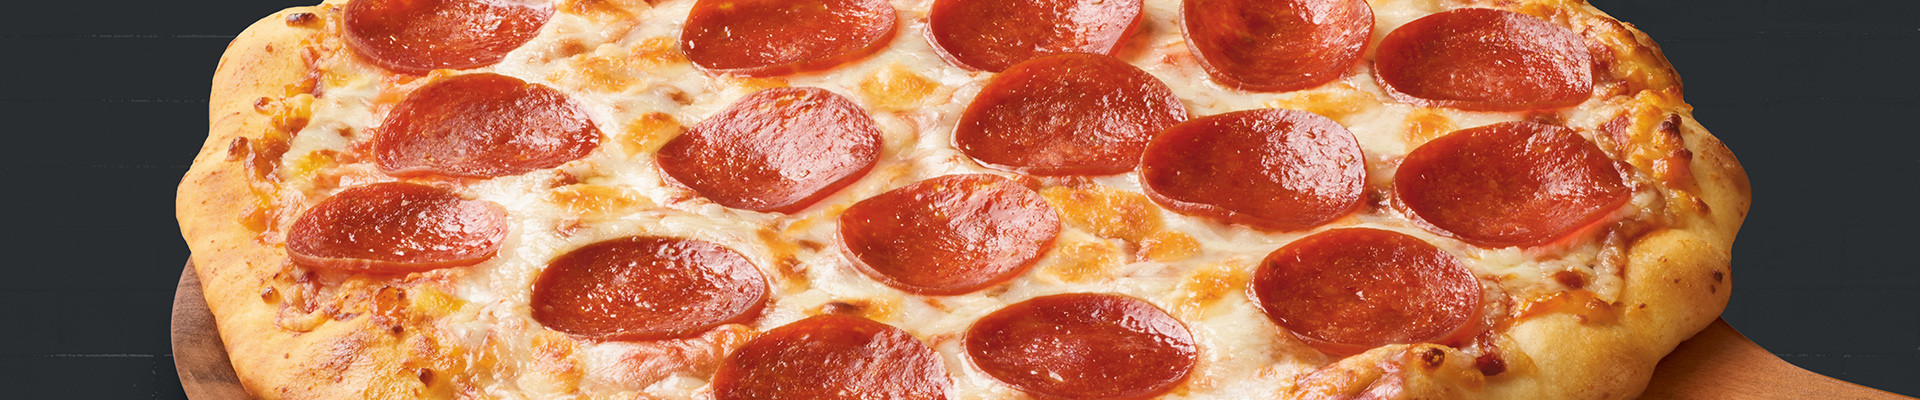 RED BARON® Brick Oven Pepperoni Pizza